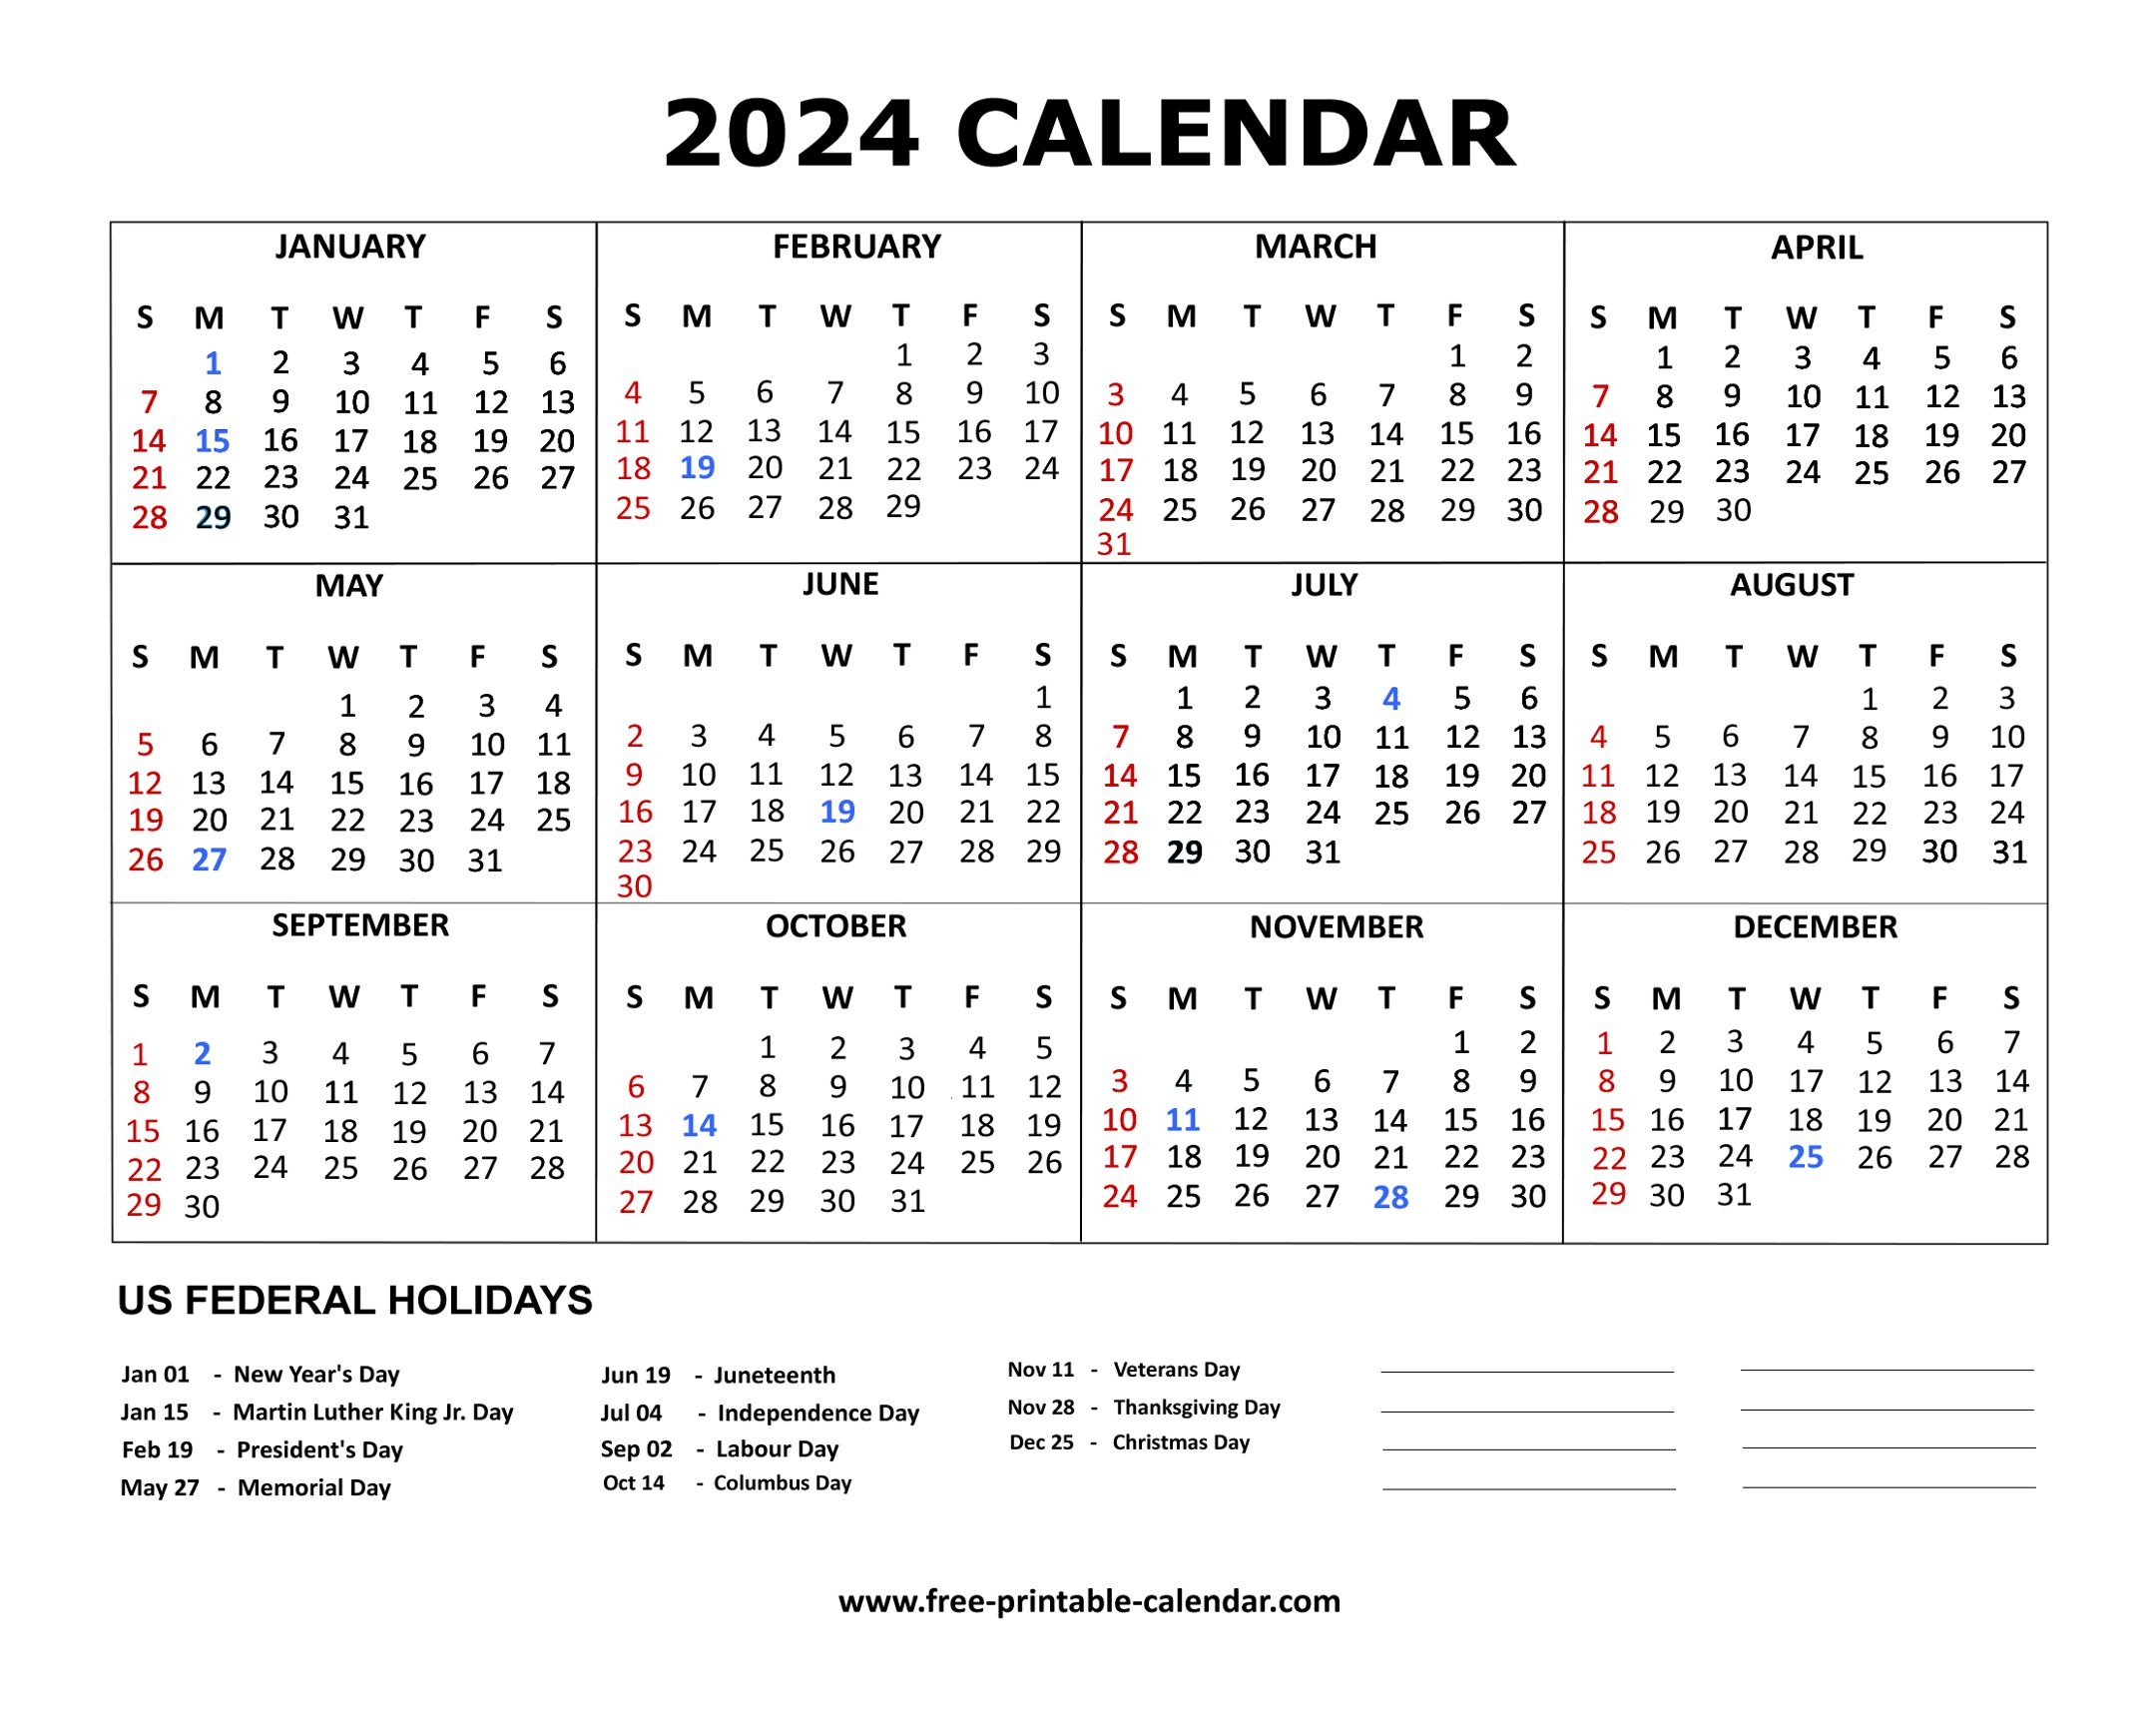 2024 Calendar | Free Printable Calendar 2024 With Holidays